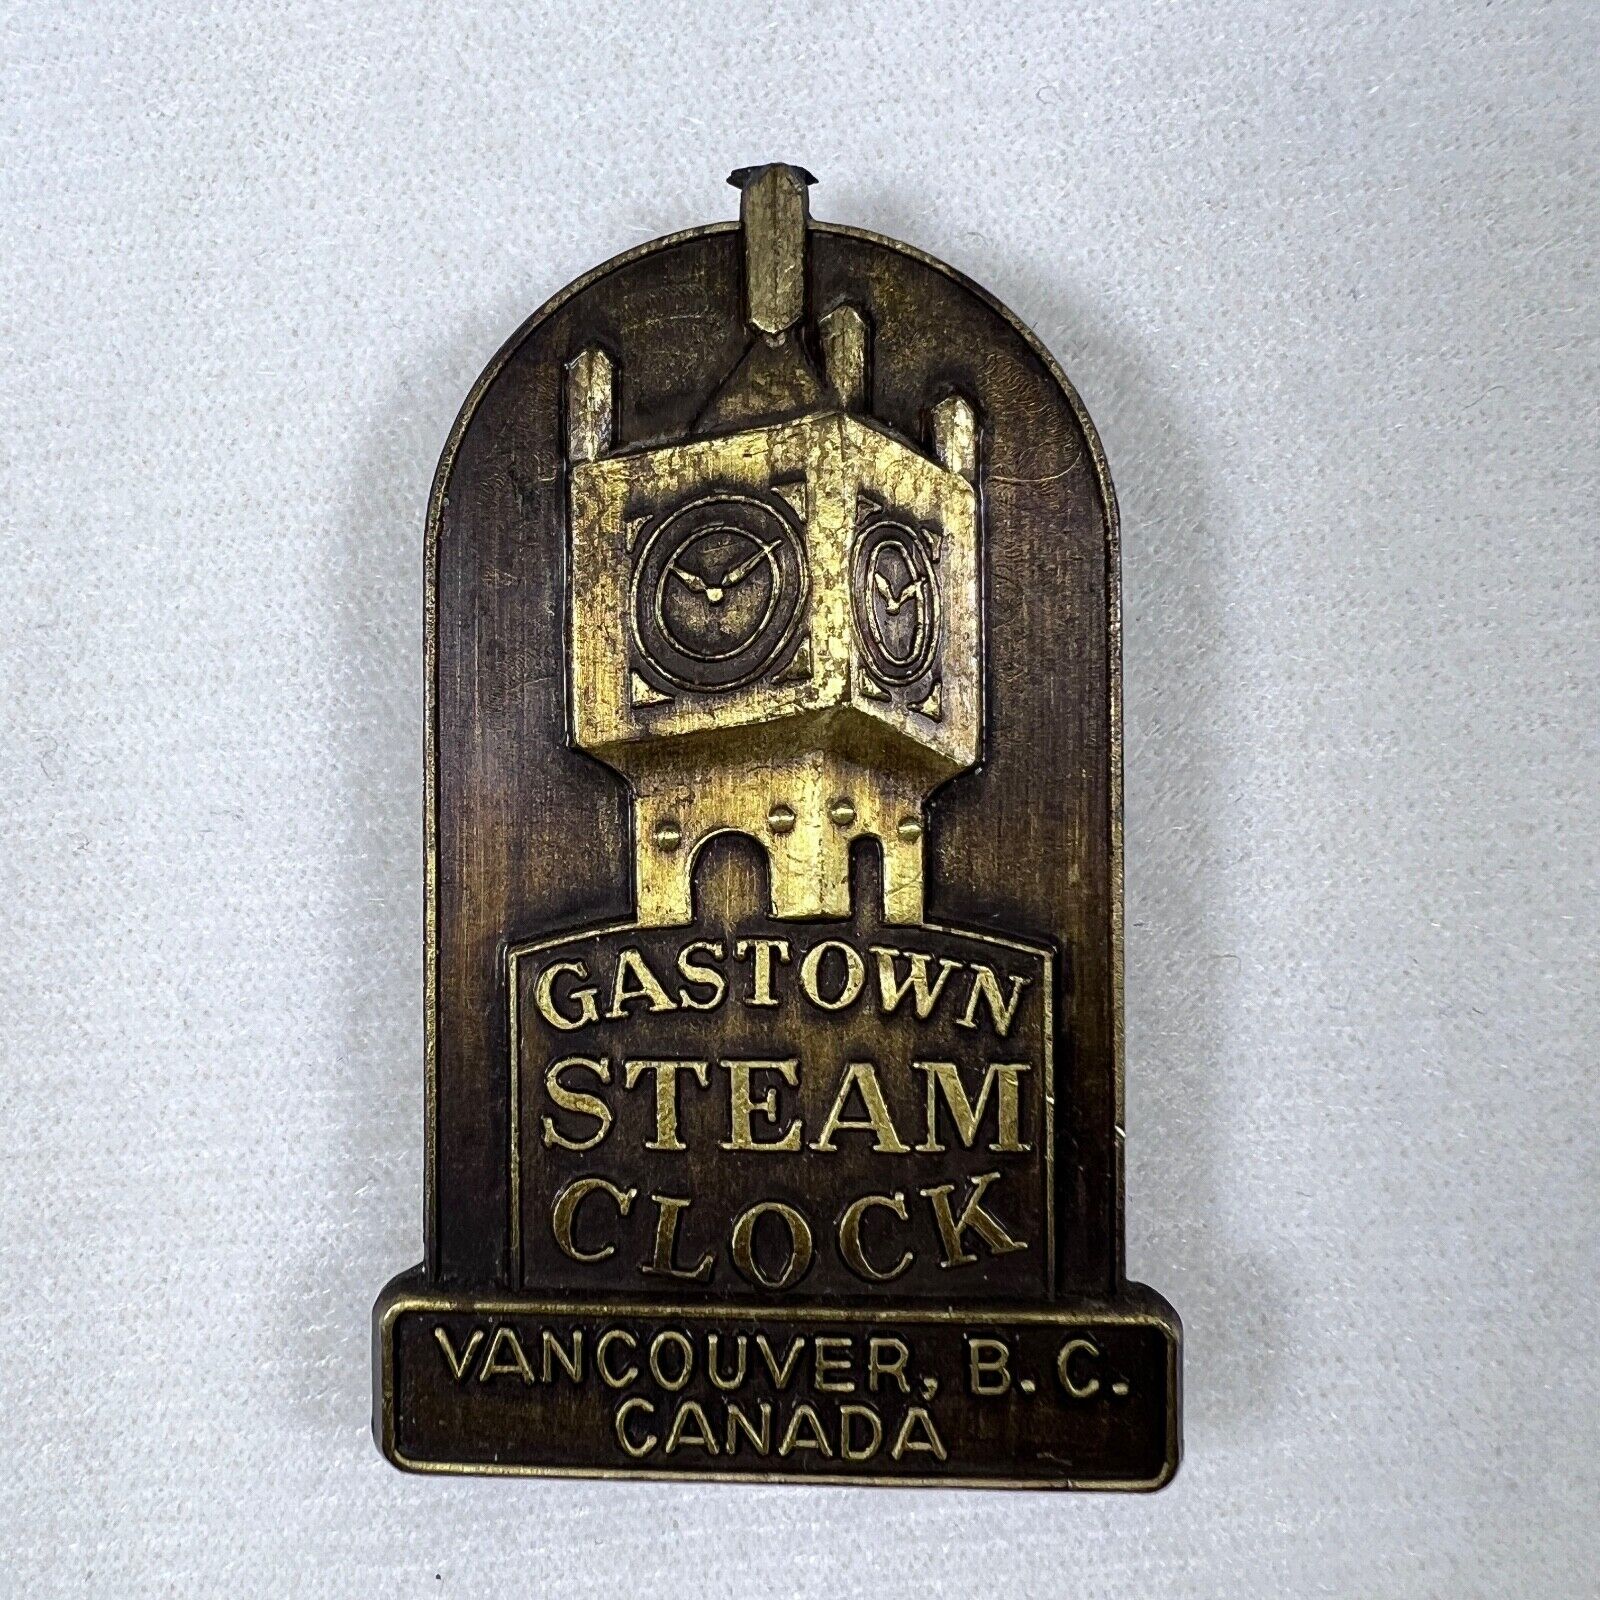 Gastown Steam Clock Refrigerator Magnet Vancouver BC Canada British Columbia